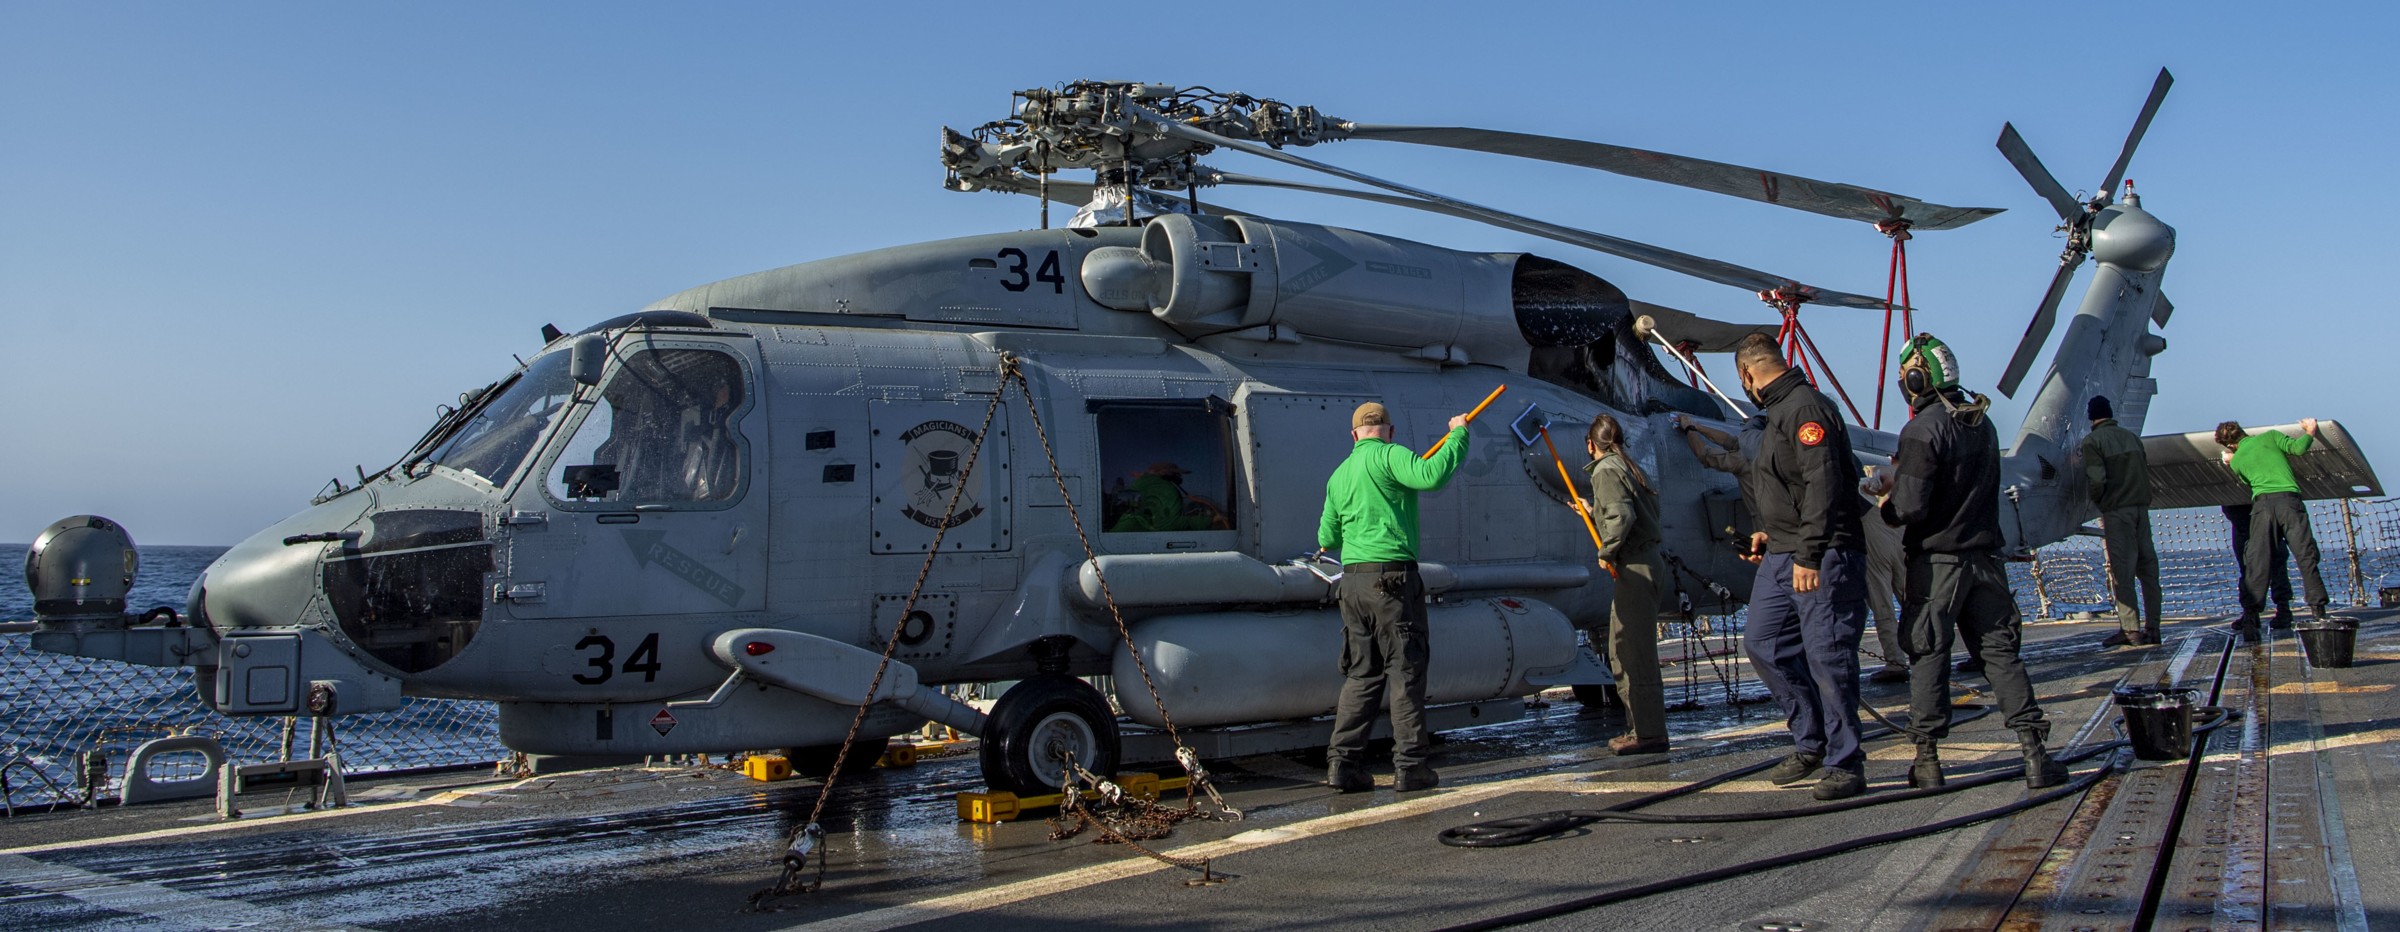 hsm-35 magicians helicopter maritime strike squadron us navy mh-60r seahawk uss john finn ddg-113 64